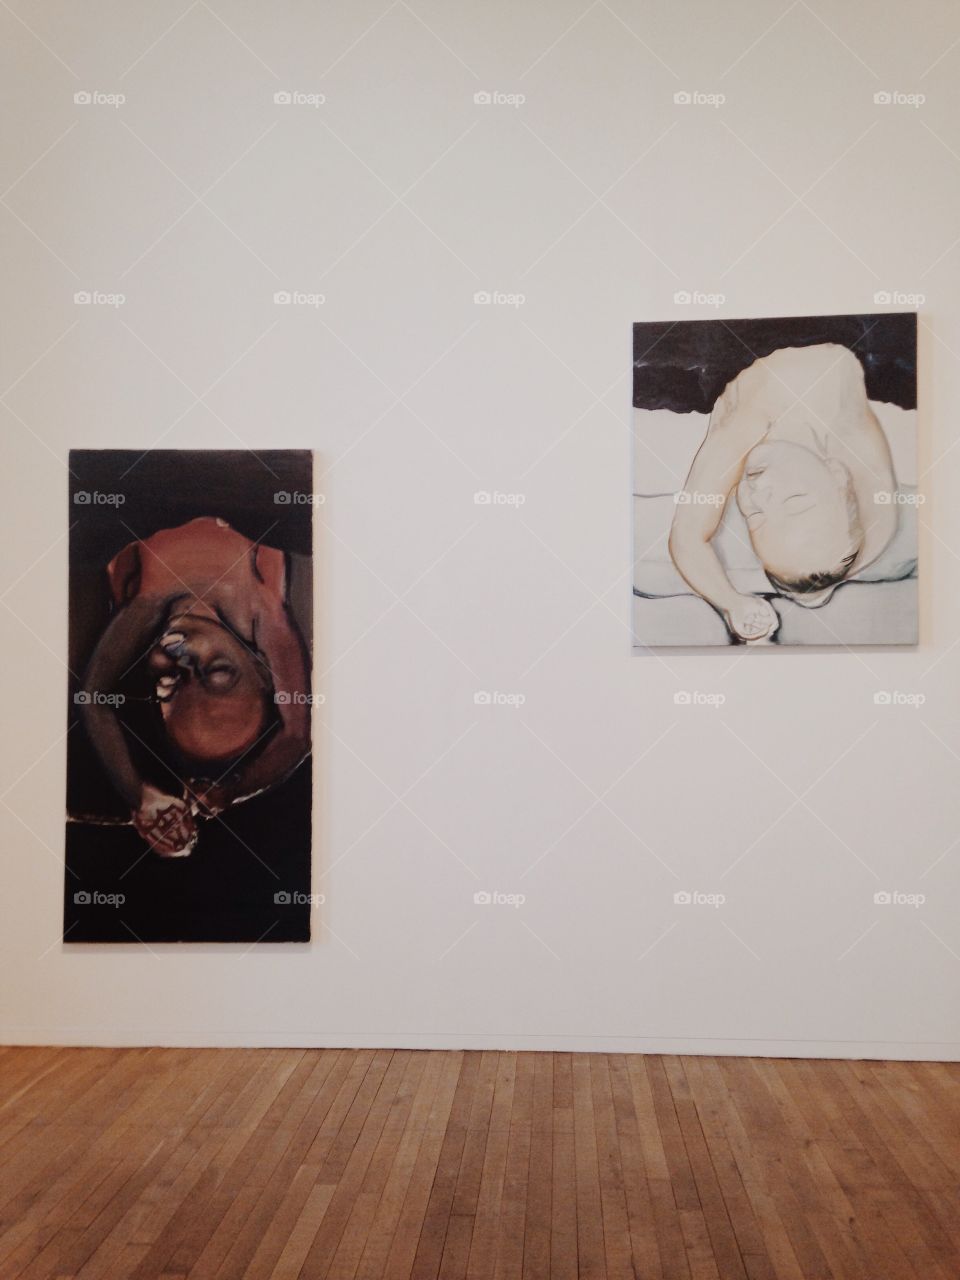 Marlene Dumas exhibition. Tate modern 14.04.15